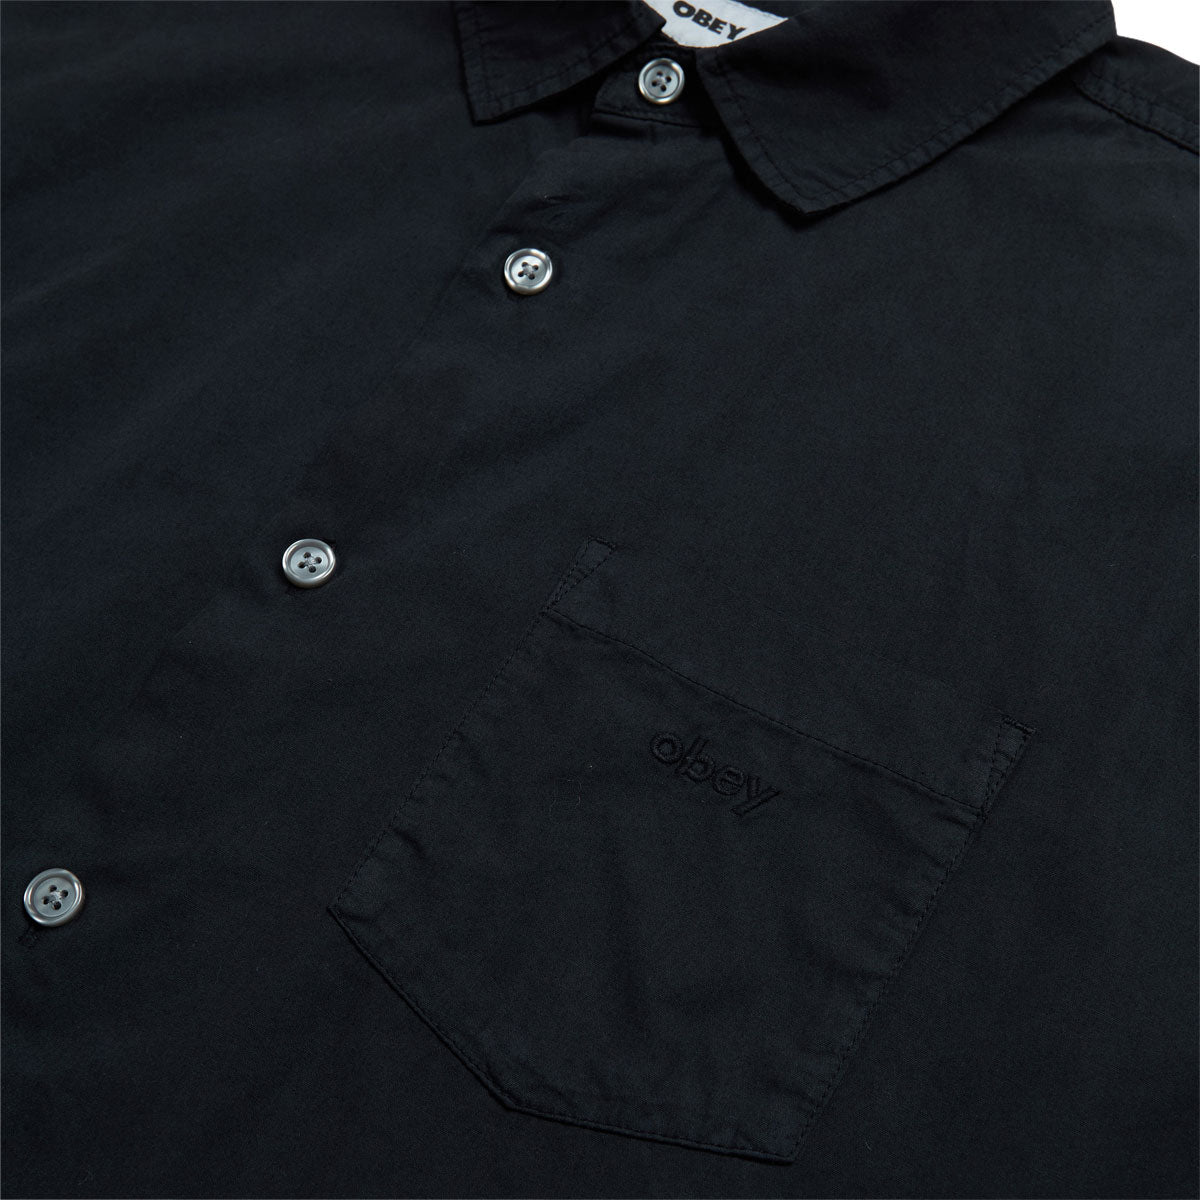 Obey Pigment Lowercase Woven Shirt - Pigment Vintage Black image 3